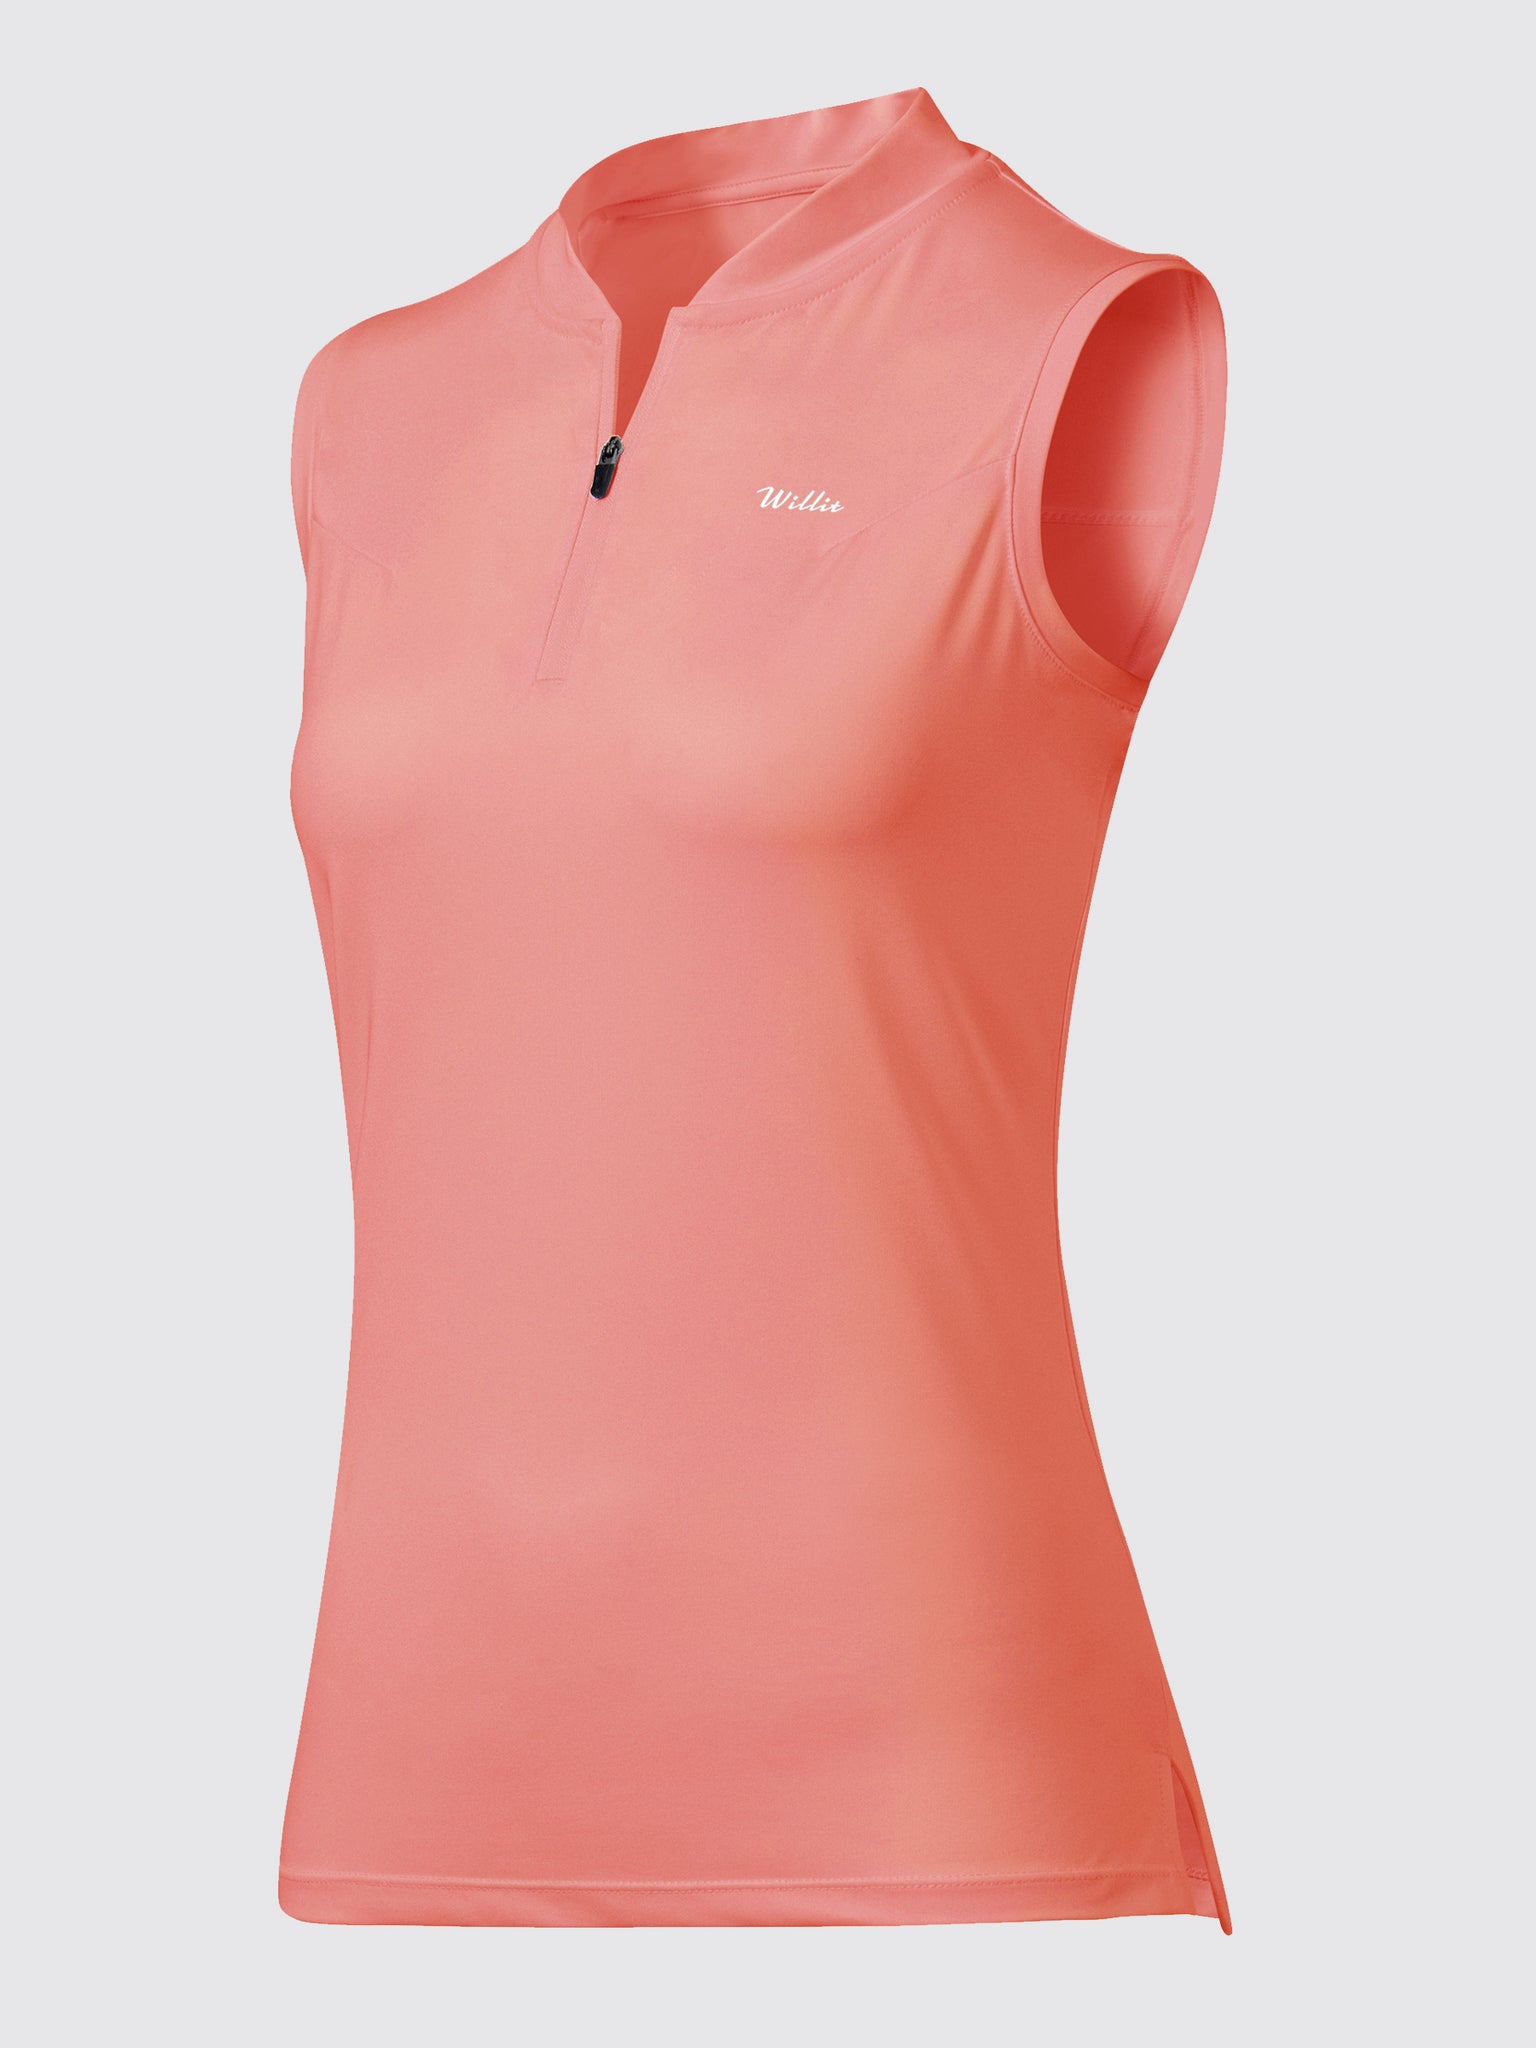 Women's Sleeveless Golf Polo Shirts